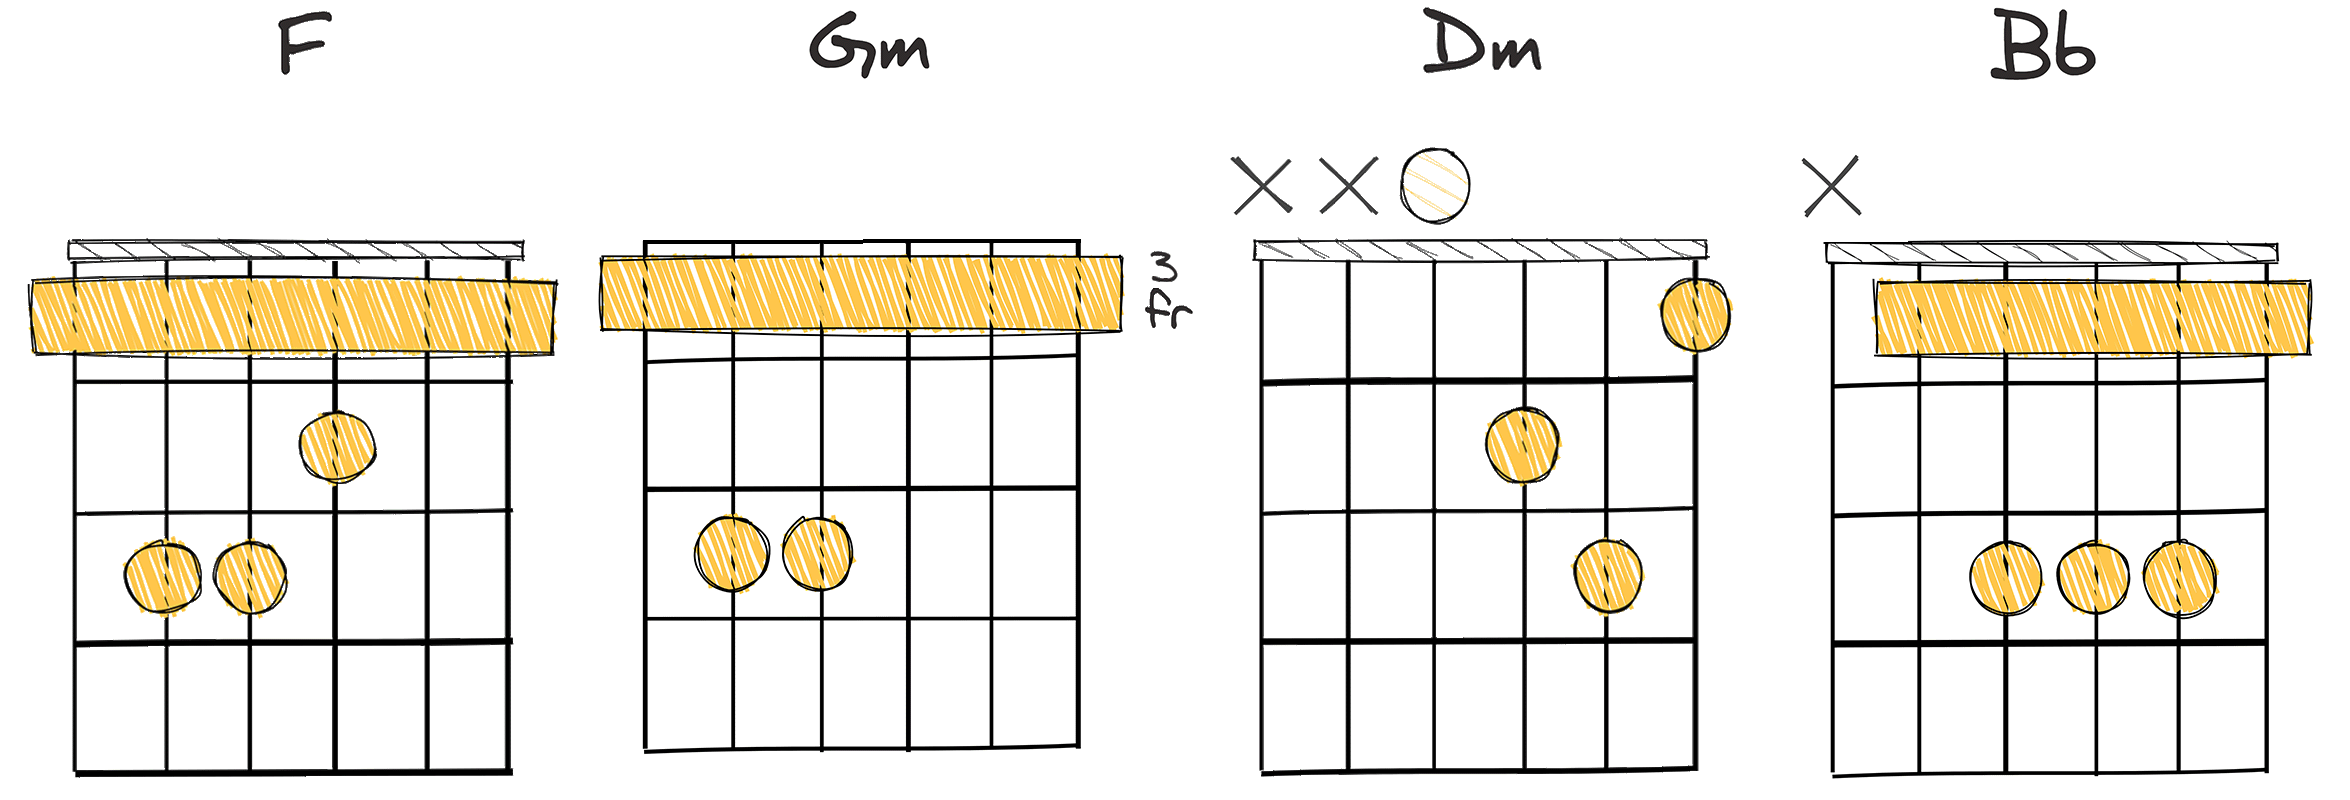 I - ii - vi - IV (1 - 2 - 6 - 4) chords diagram